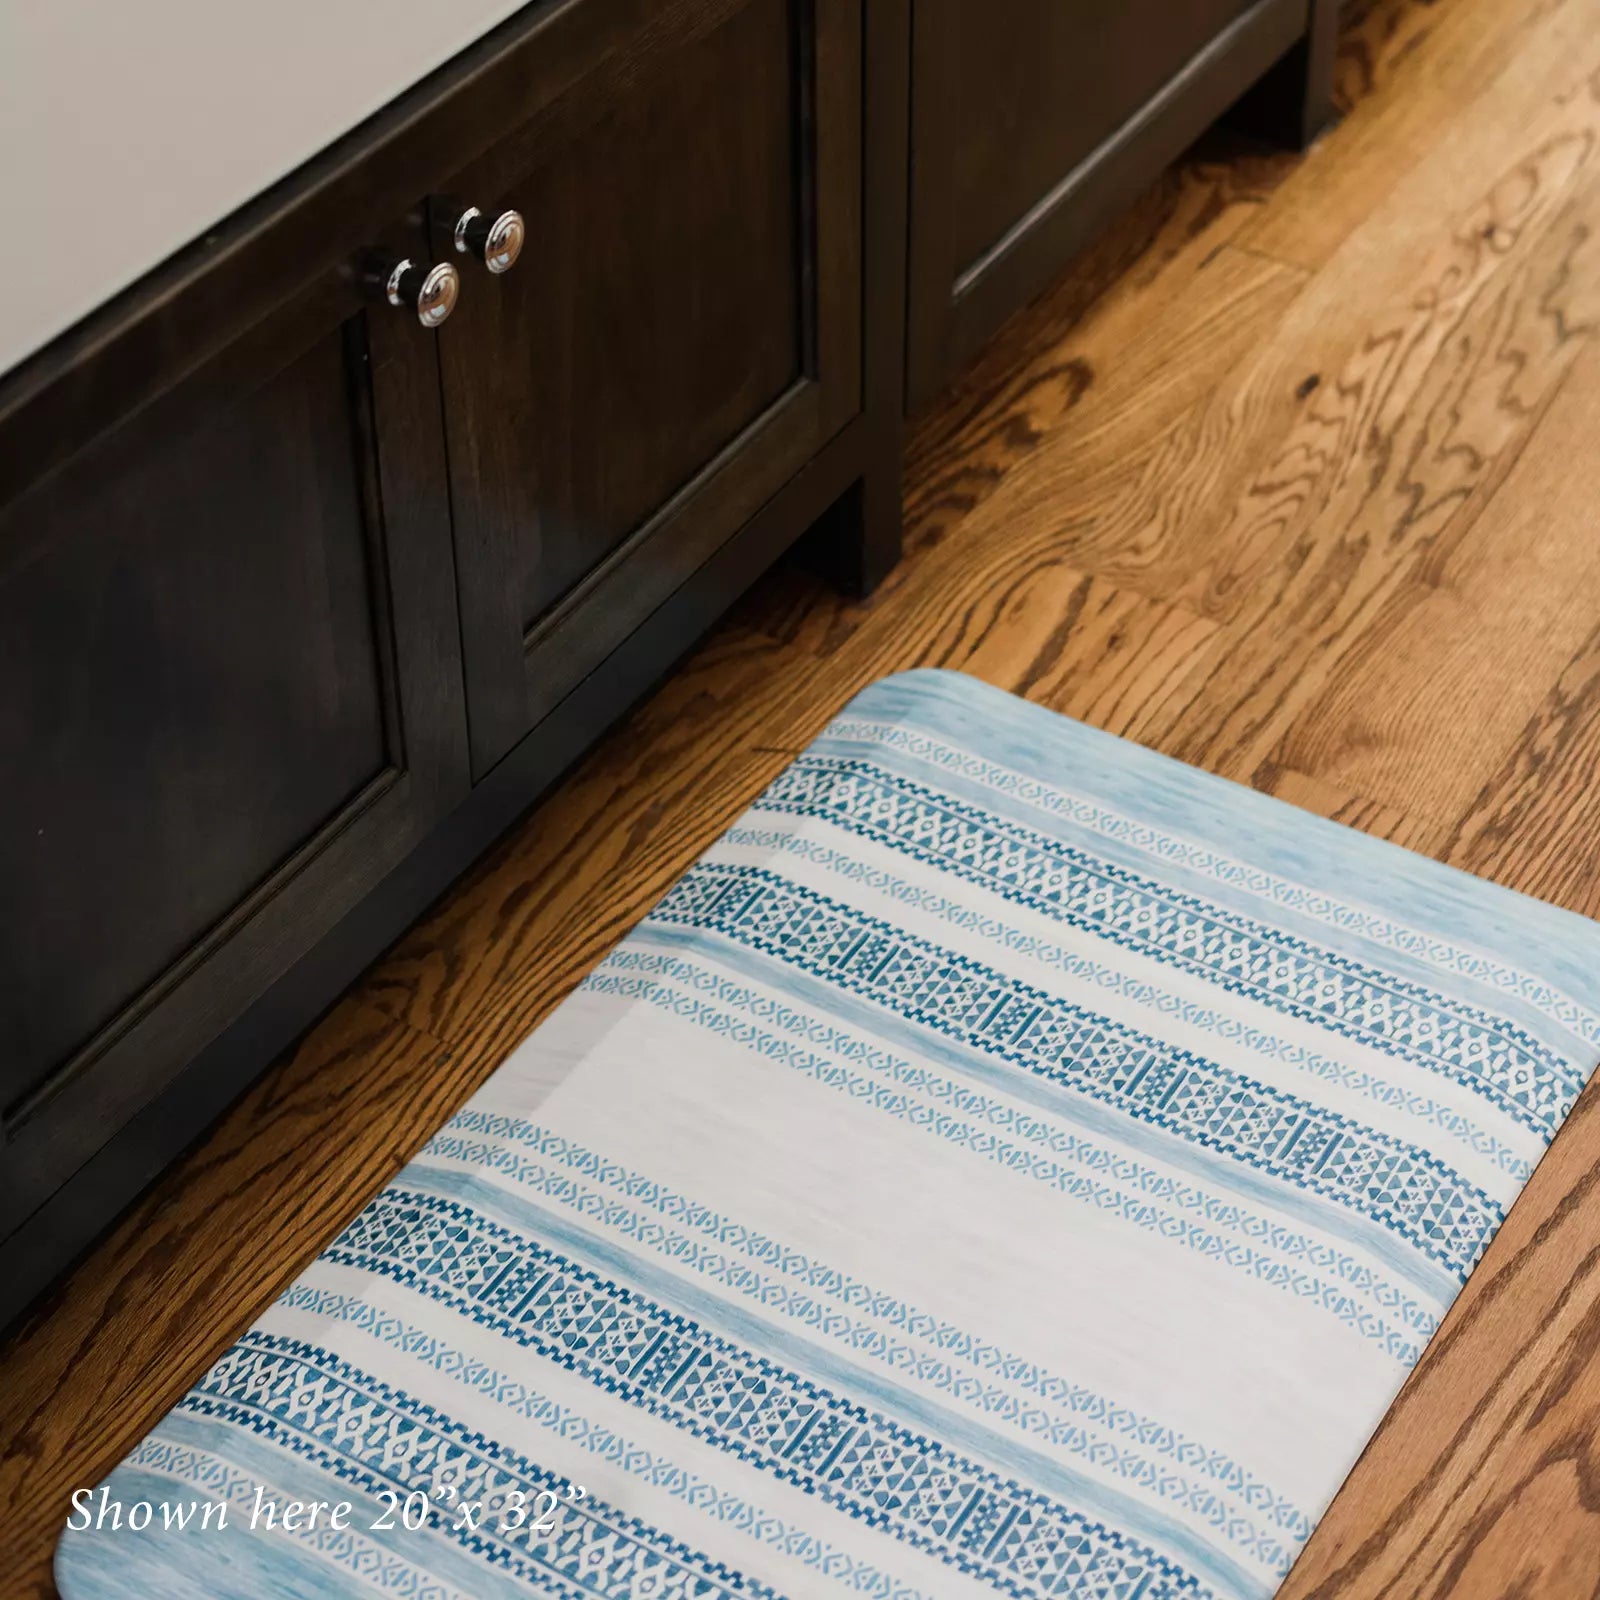 Blue and white boho stripe kitchen mat in kitchen shown in size 20x32